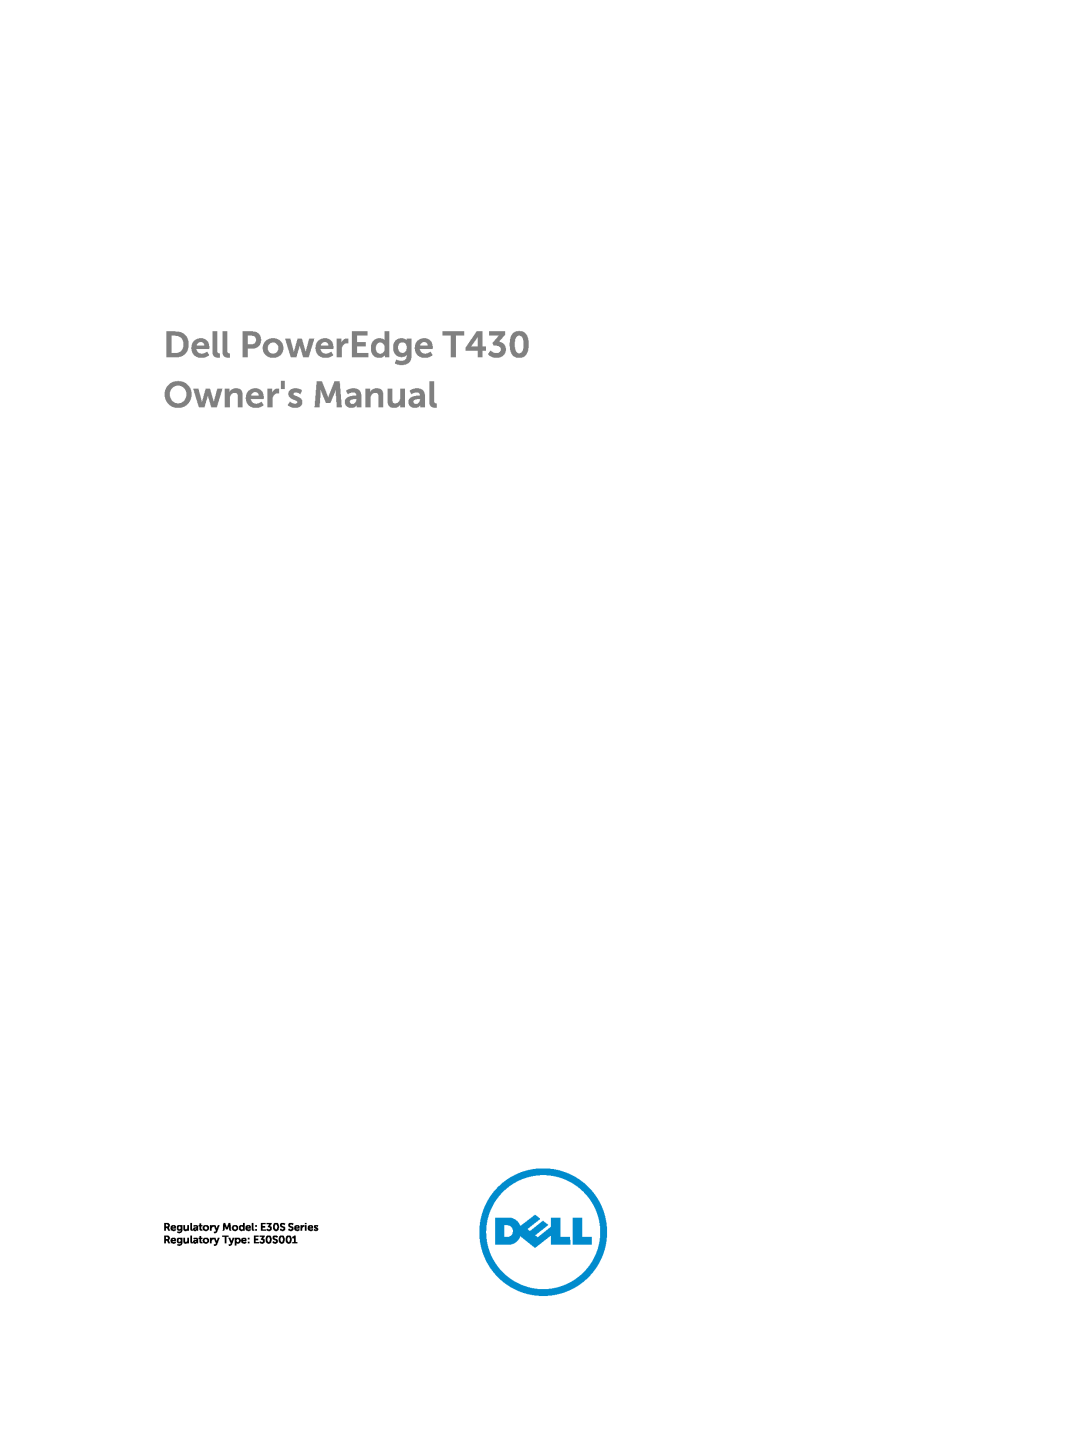 Dell owner manual Dell PowerEdge T430 Owners Manual, Regulatory Model E30S Series Regulatory Type E30S001 